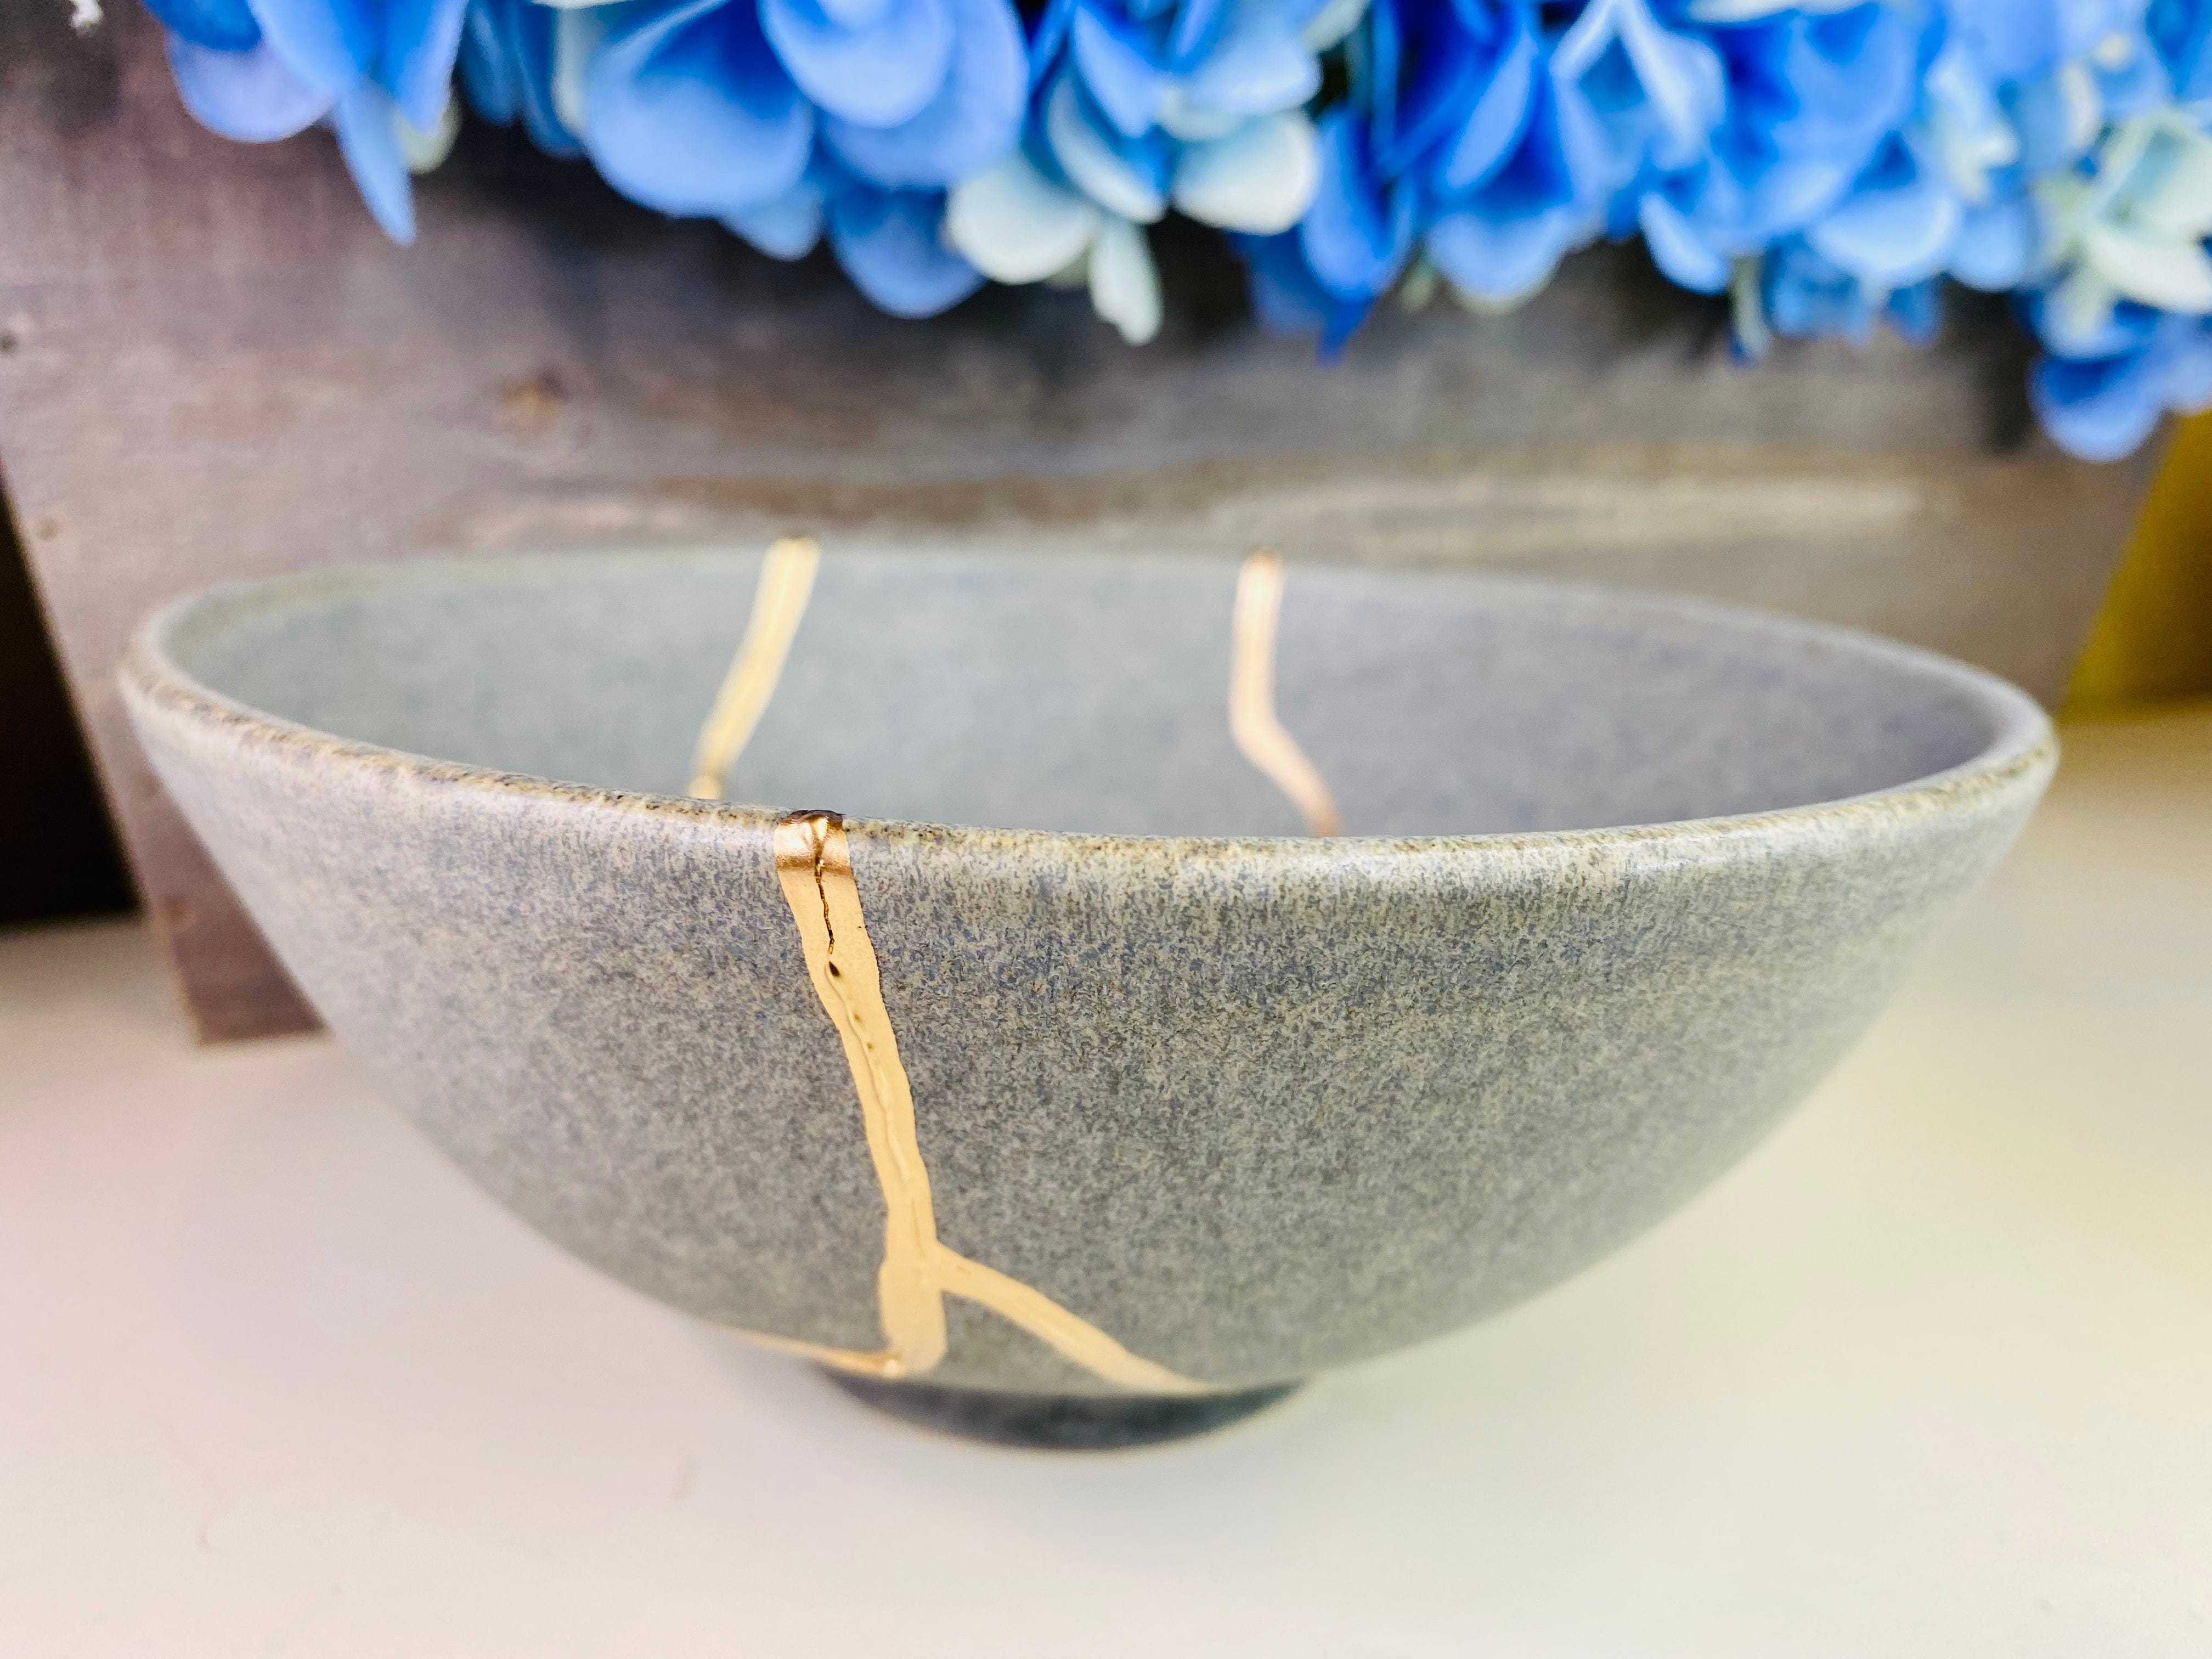 Kintsugi Bowl, Concrete Grey Bowl, Kintsugi Gifts, Minimalist Gift, Kintsugi Pottery, Rustic, Summer Gifts, Kintsugi Stoneware Concrete Bowl